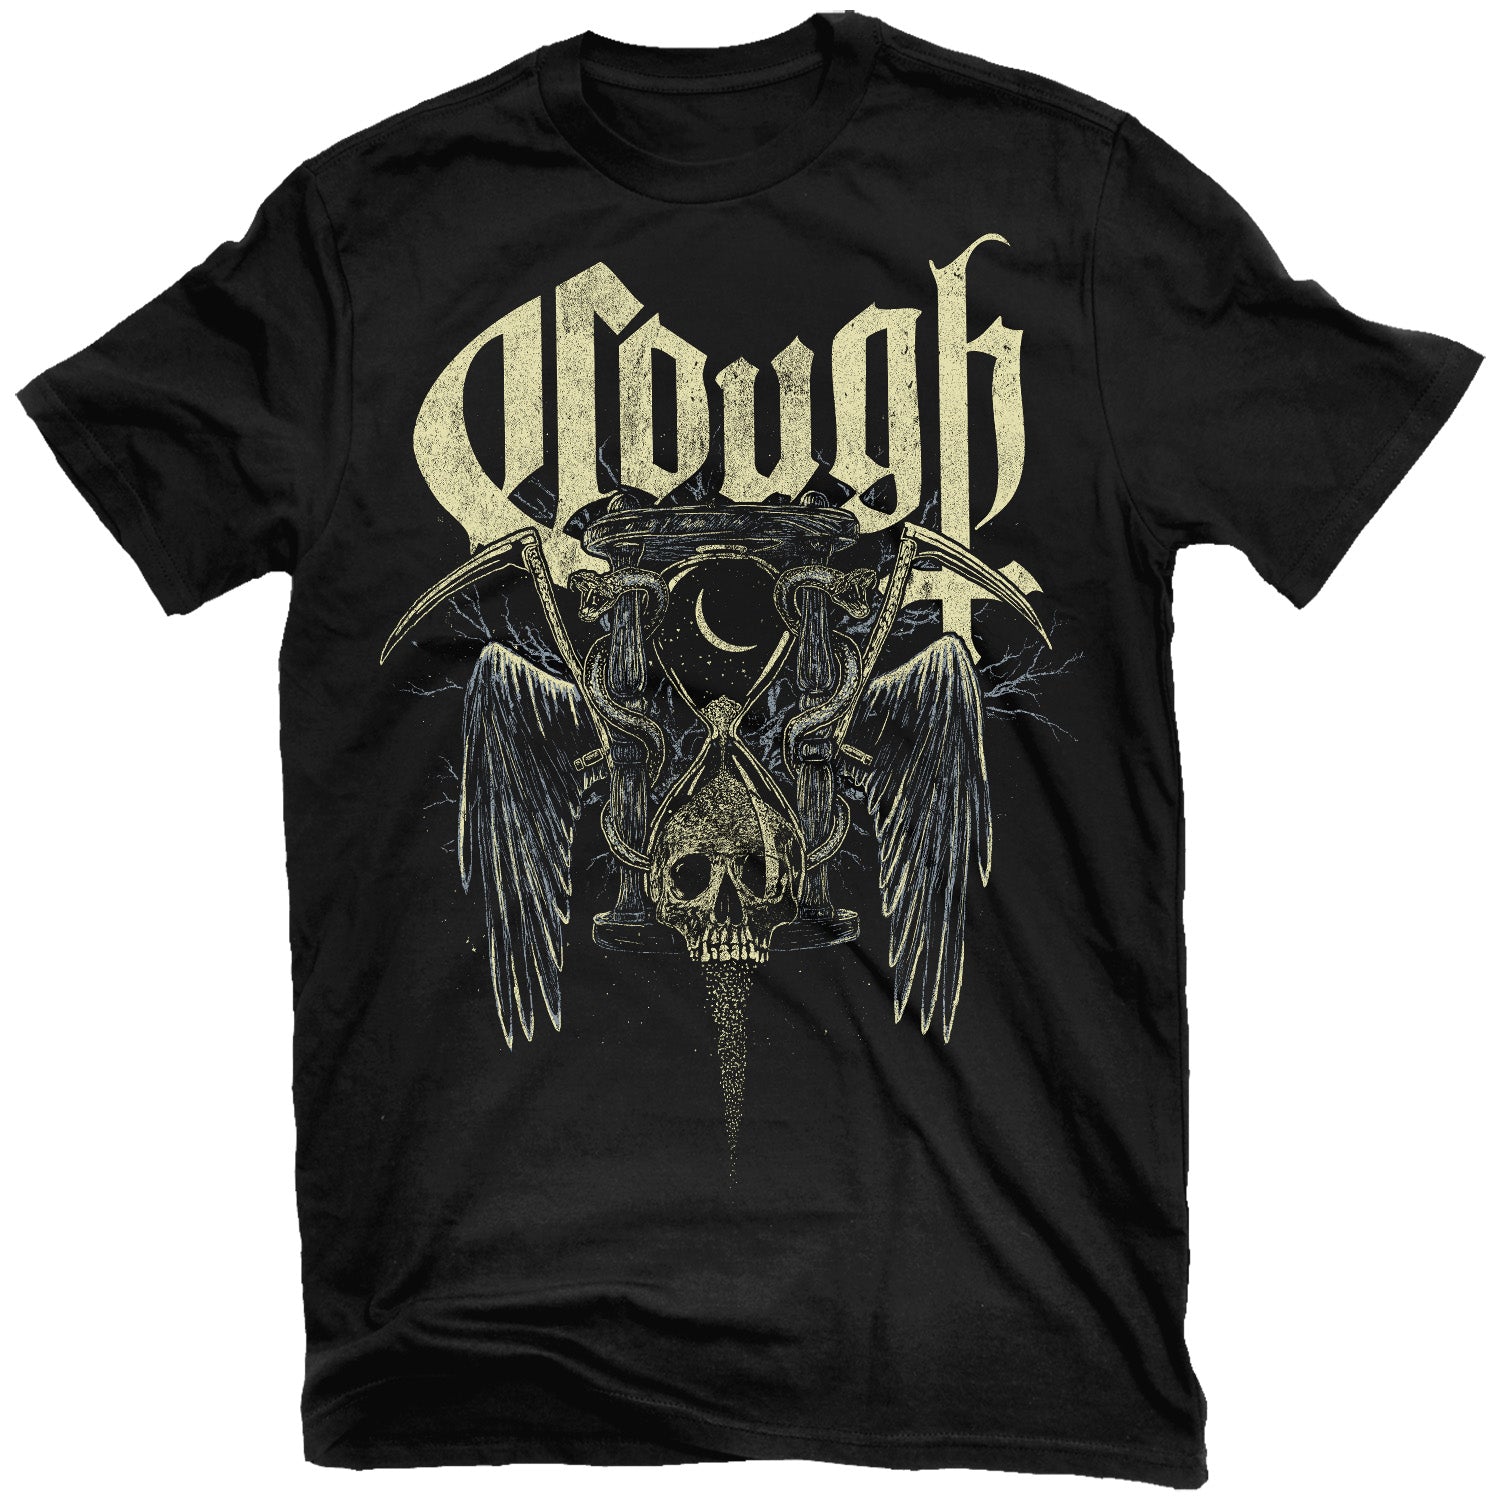 Cough "Wounding Hours" T-Shirt